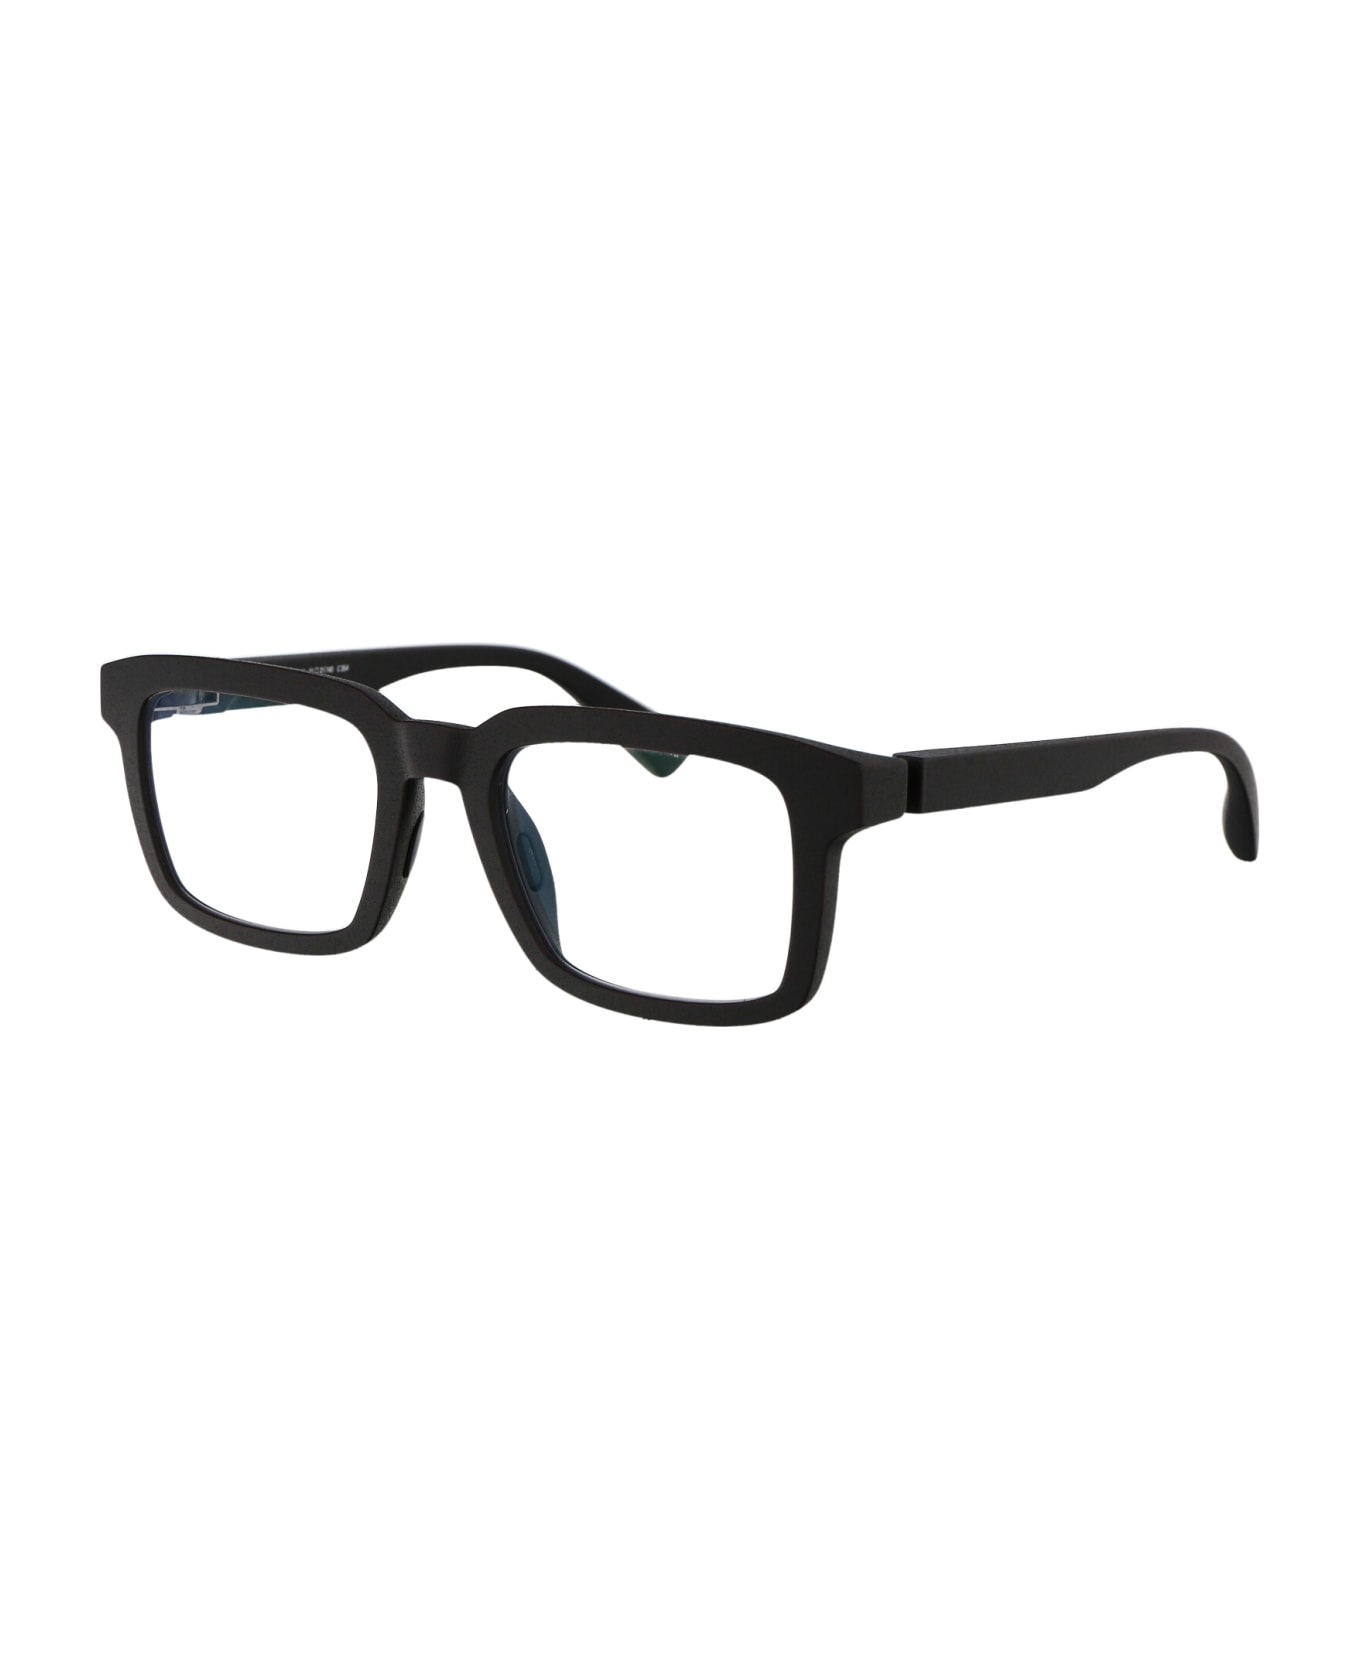 Mykita Canna Glasses - 354 MD1-Pitch Black Clear アイウェア